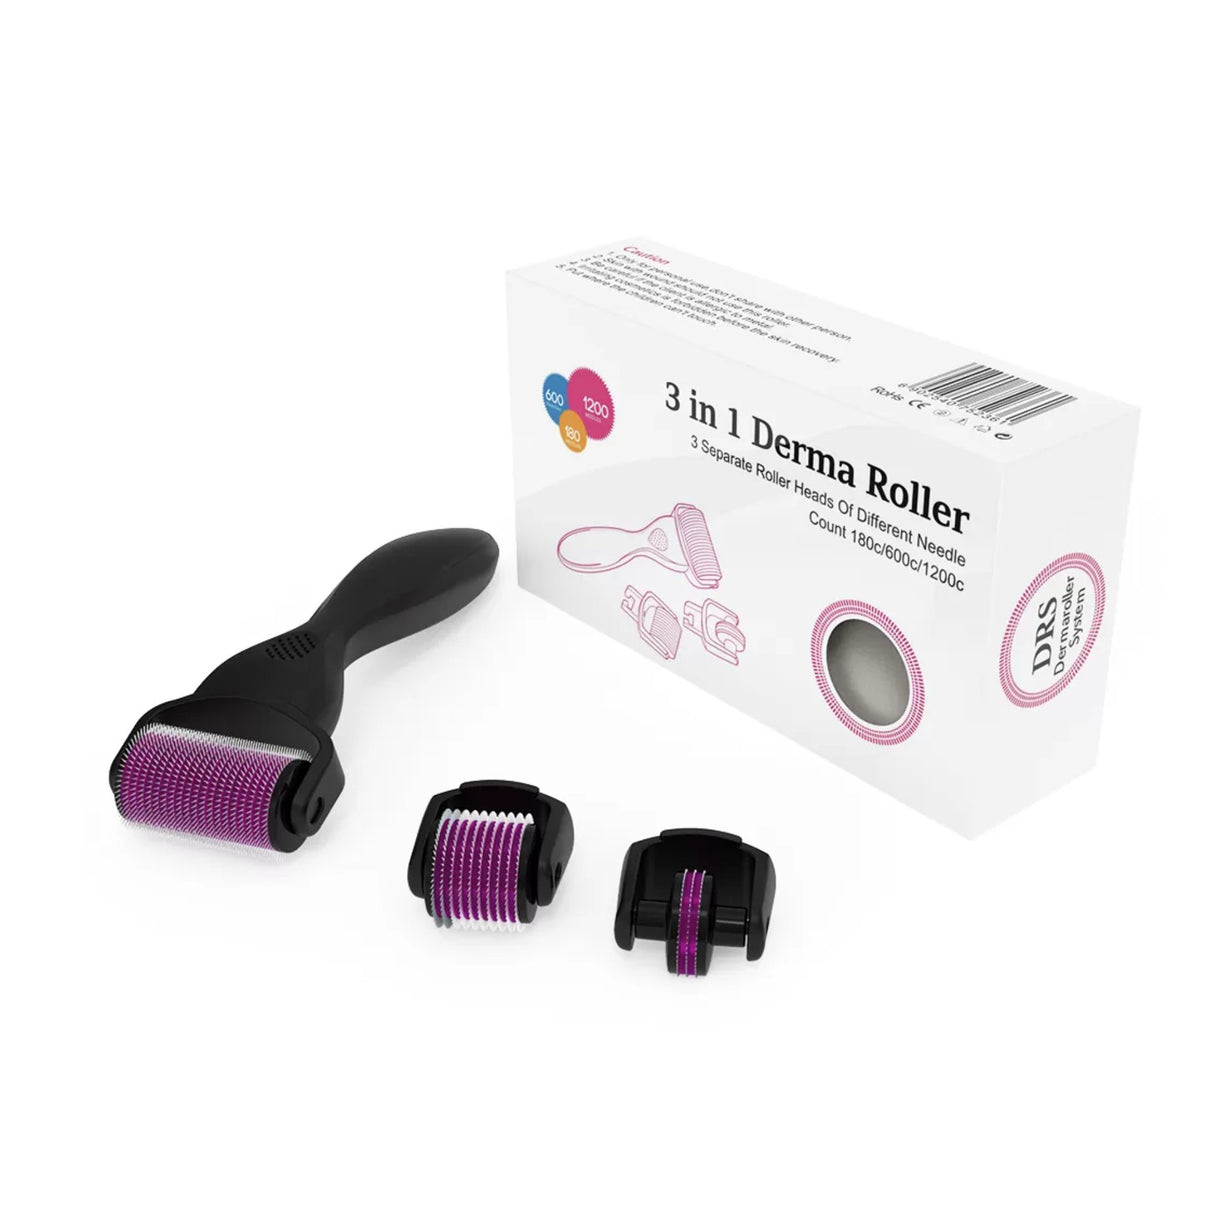 Derma Roller 3 in 1 Kit 600 Microneedles - Filler Lux™ - Medical Device - Filler Lux